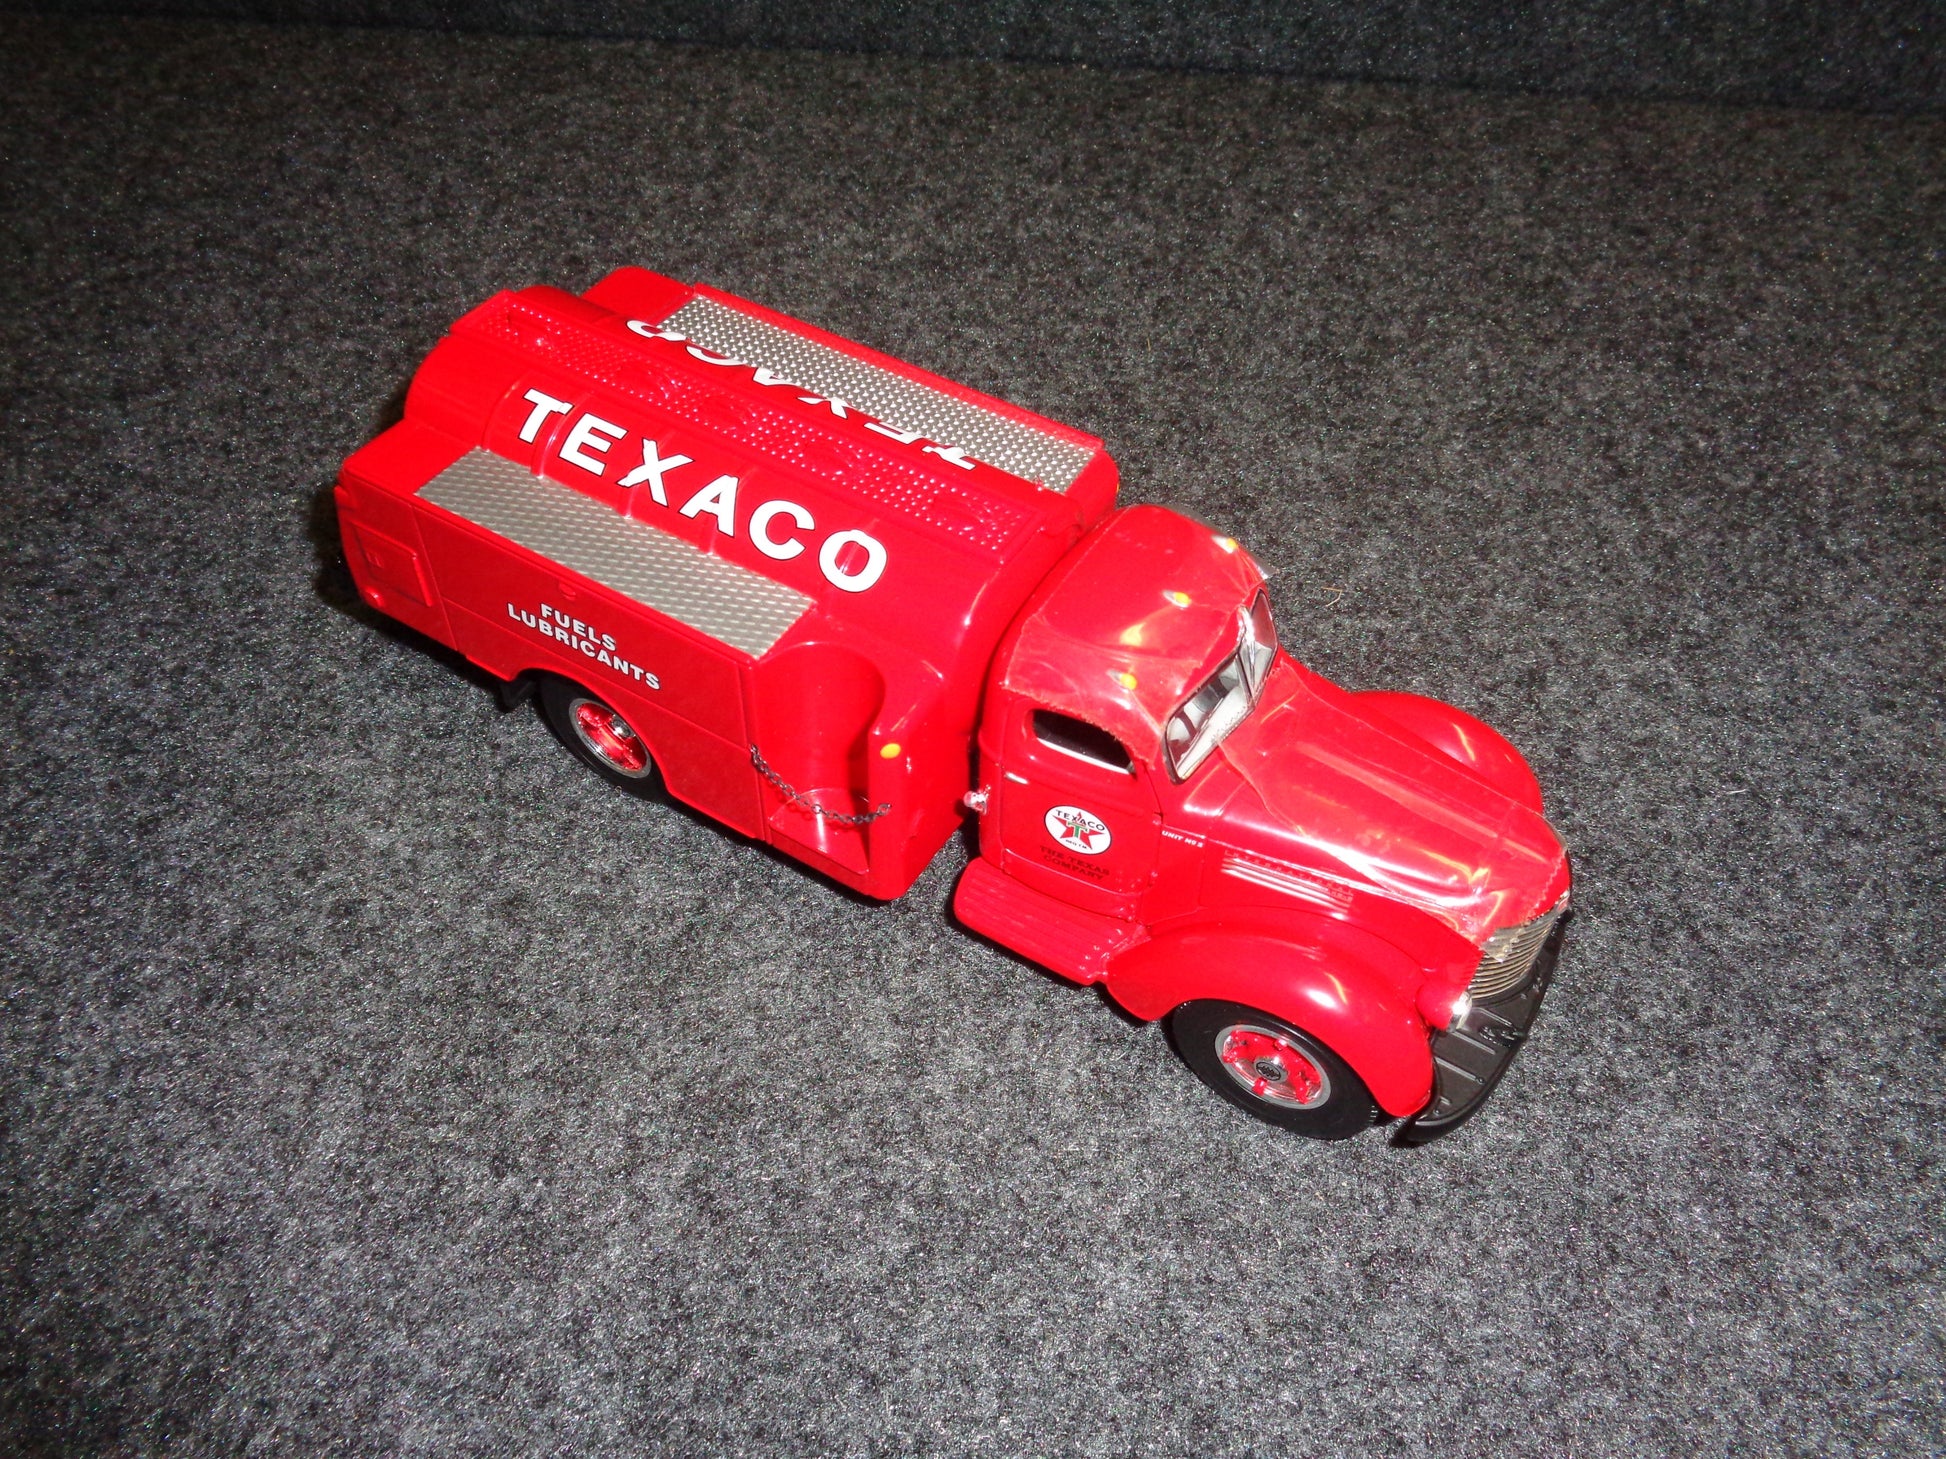 Texaco Fuels & Lubricants 1949 International KB-8 Tanker Truck